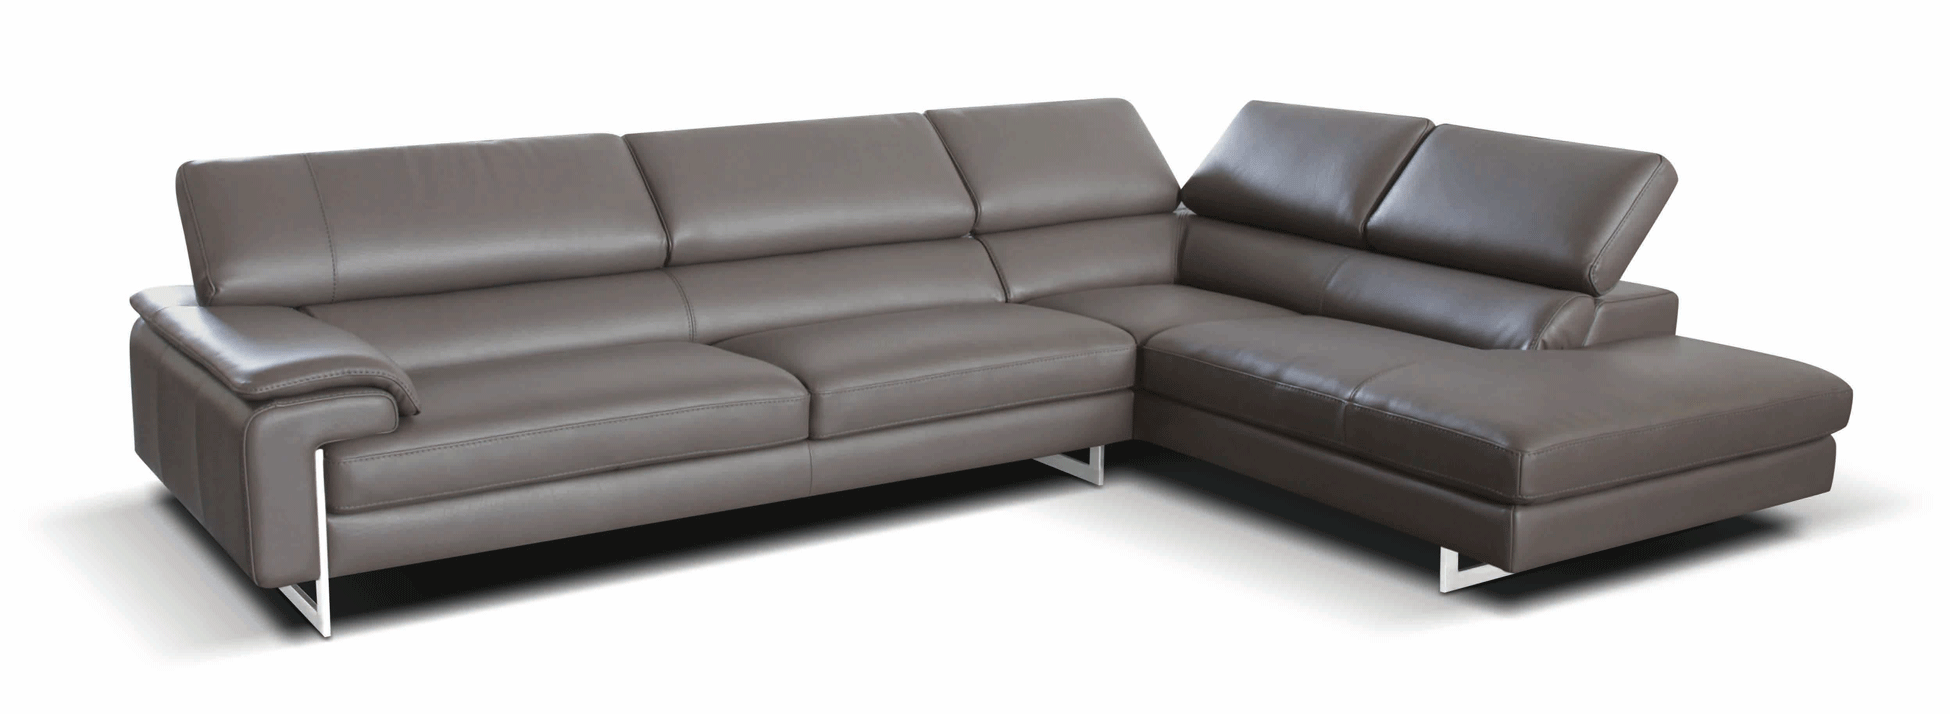 Living Room Furniture Reclining and Sliding Seats Sets Buonarroti Living room